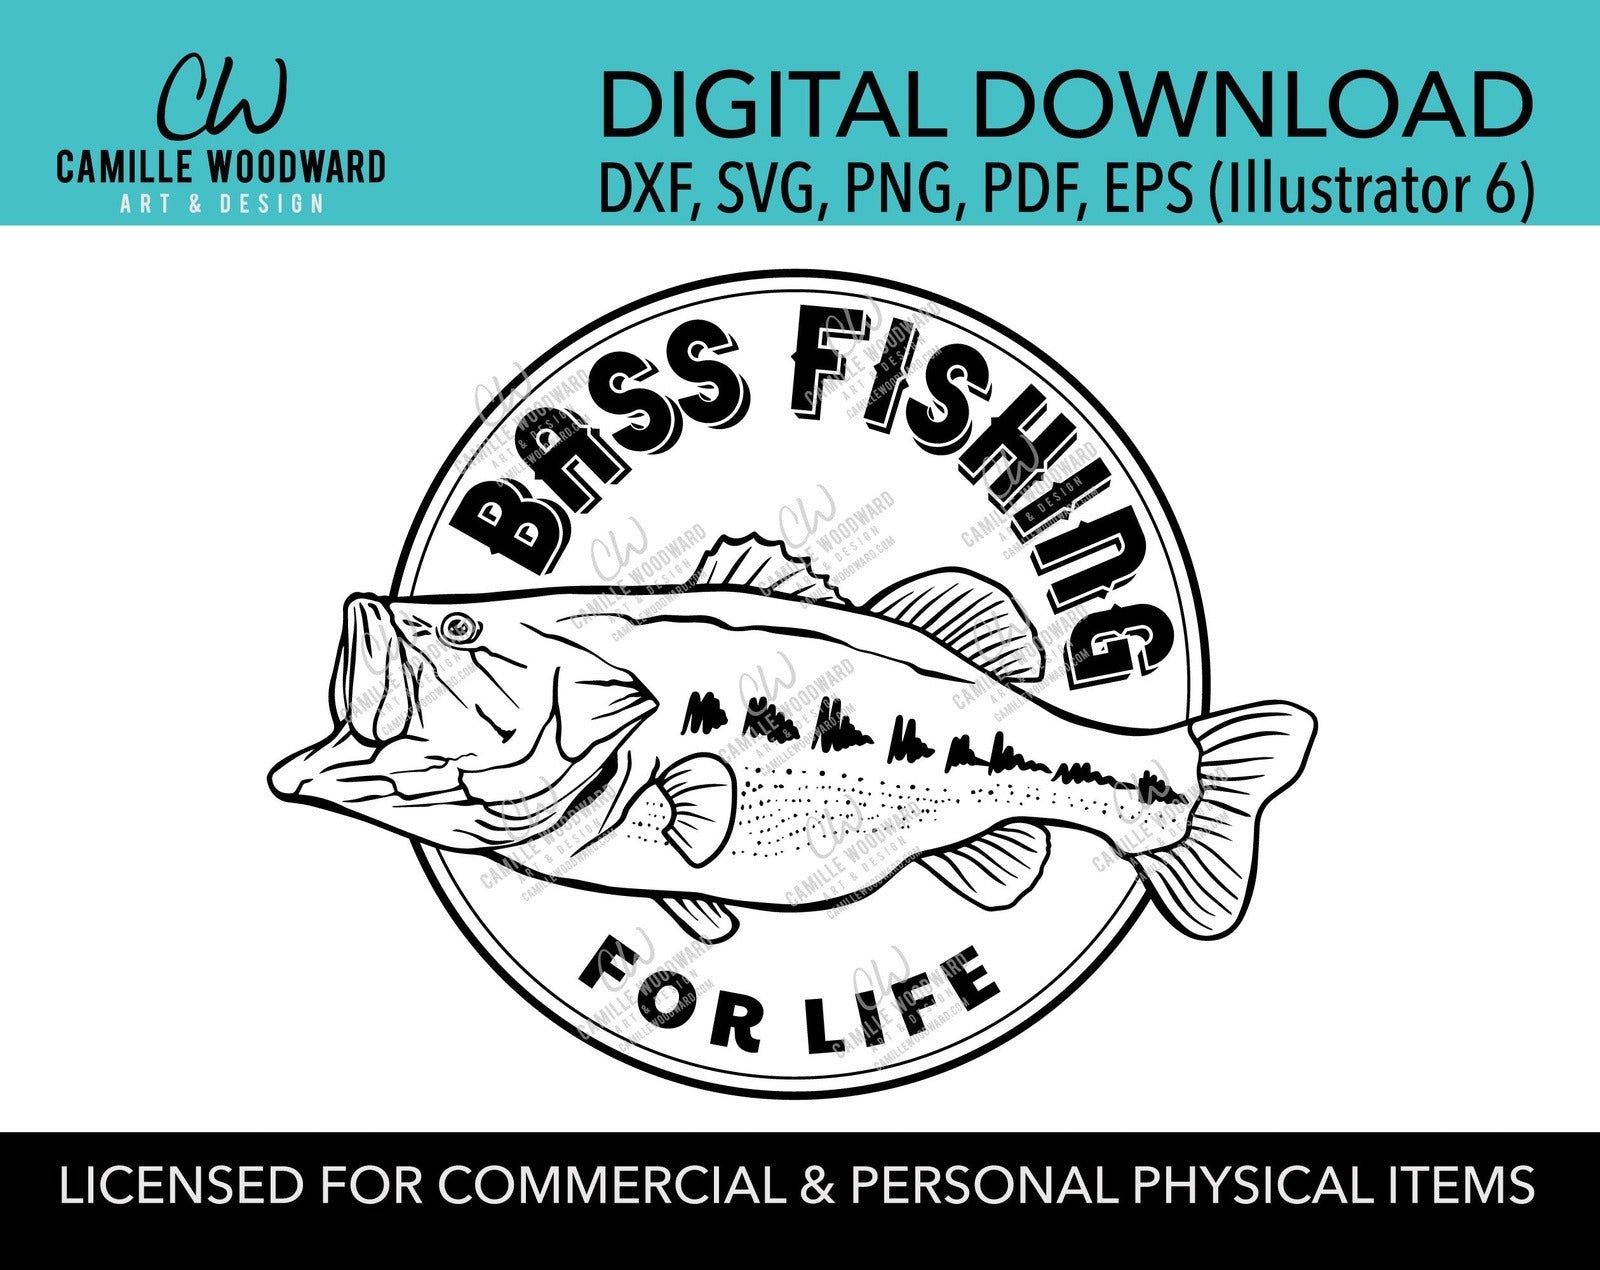 Funny Fishing Decor,Bass Fishing Sign,Fishing Cabin Decor,Bass